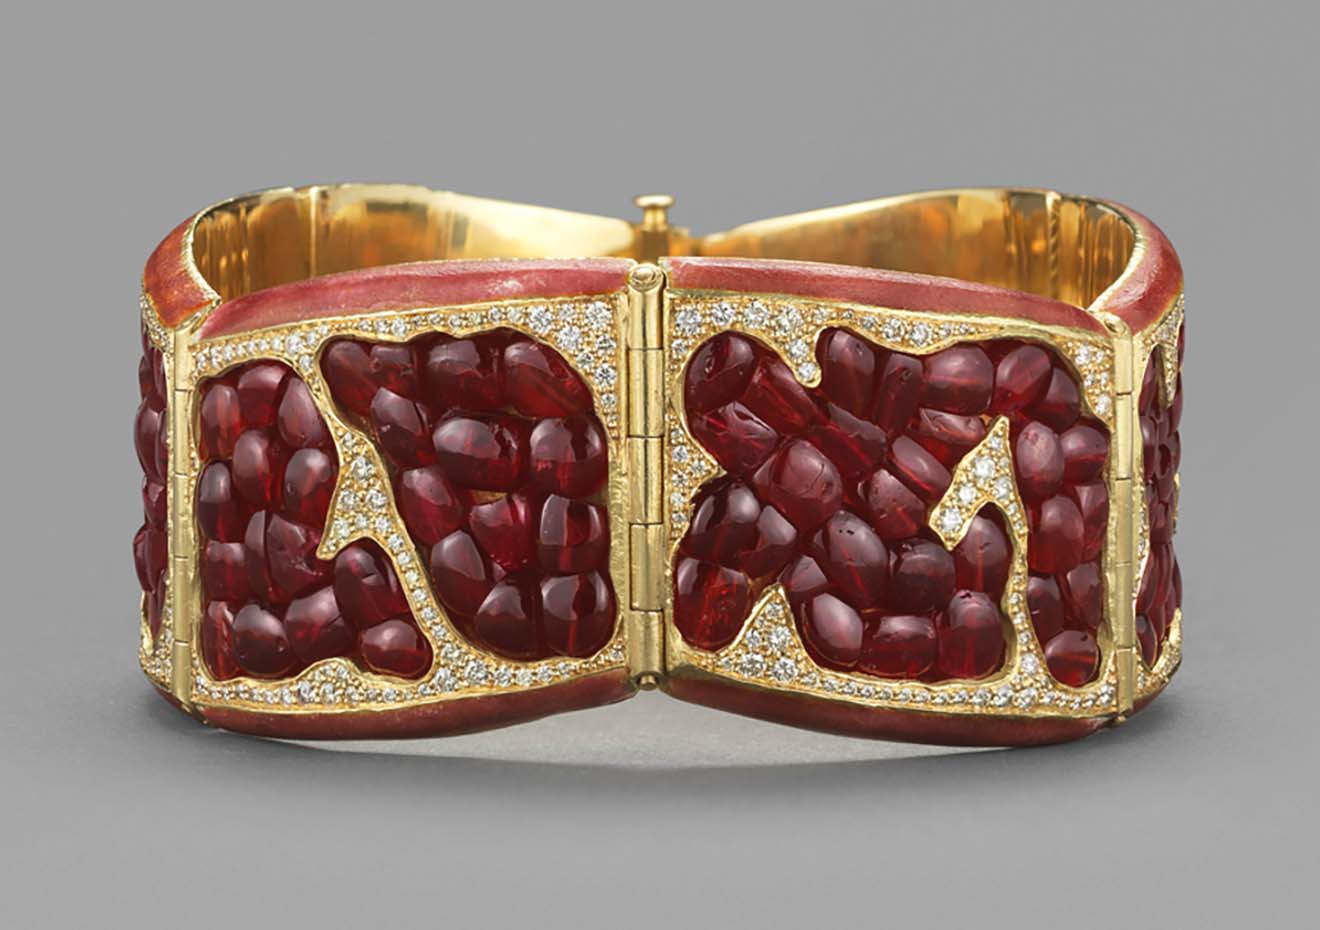 Pomegranate Bracelet
18k Gold, Diamonds, Red Spinel, Enamel